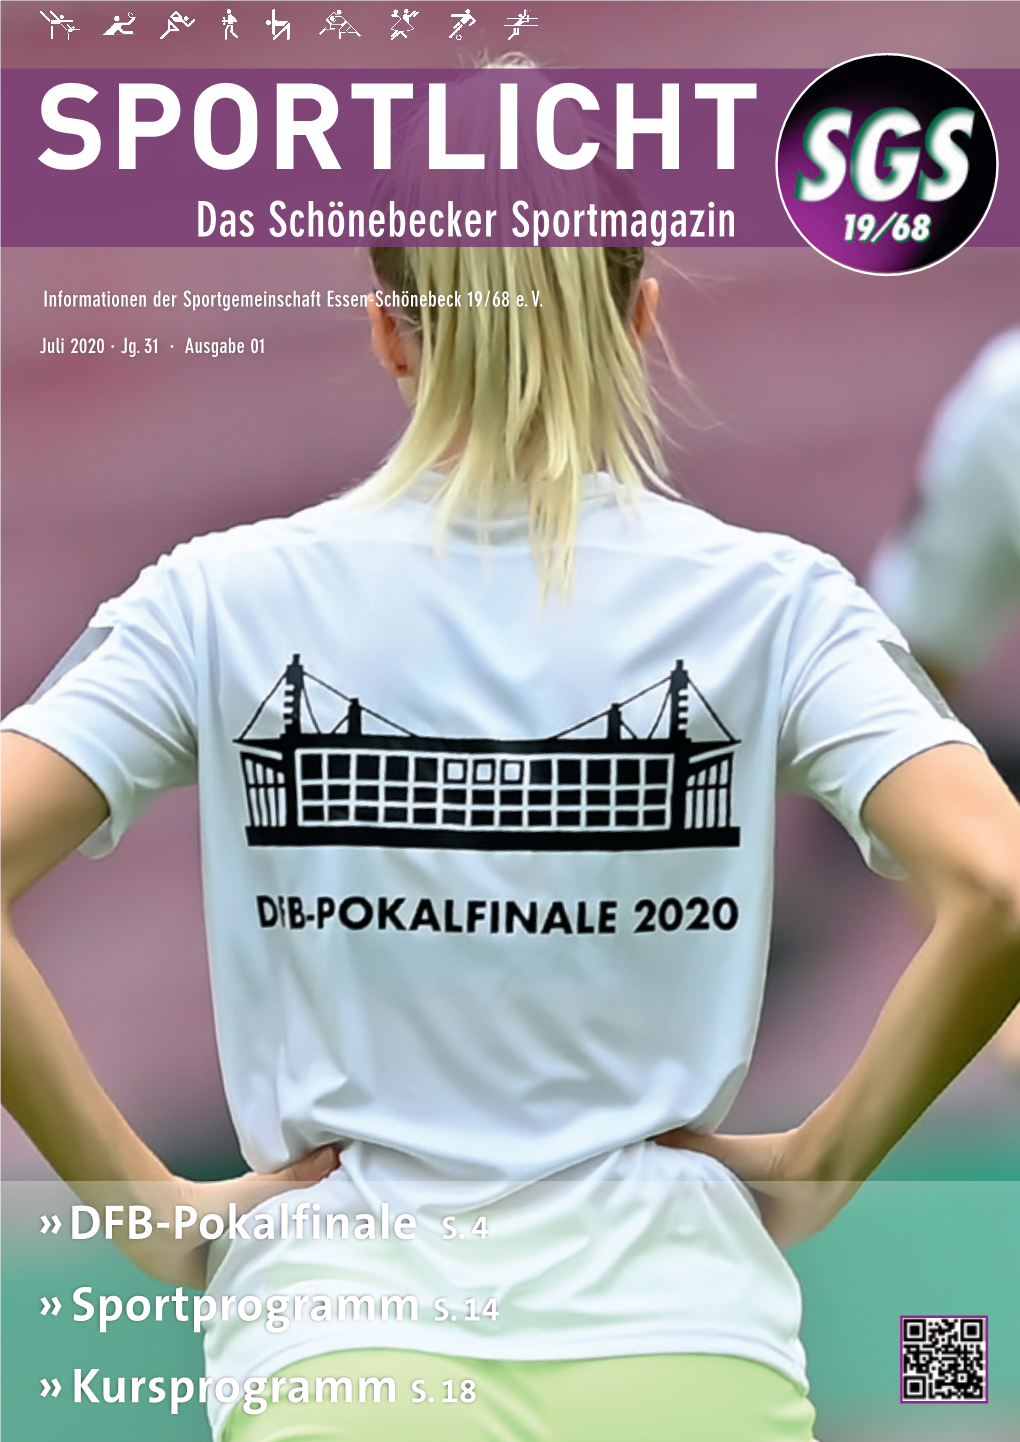 DFB-Pokalfinale S. 4 » Sportprogramm S. 14 »